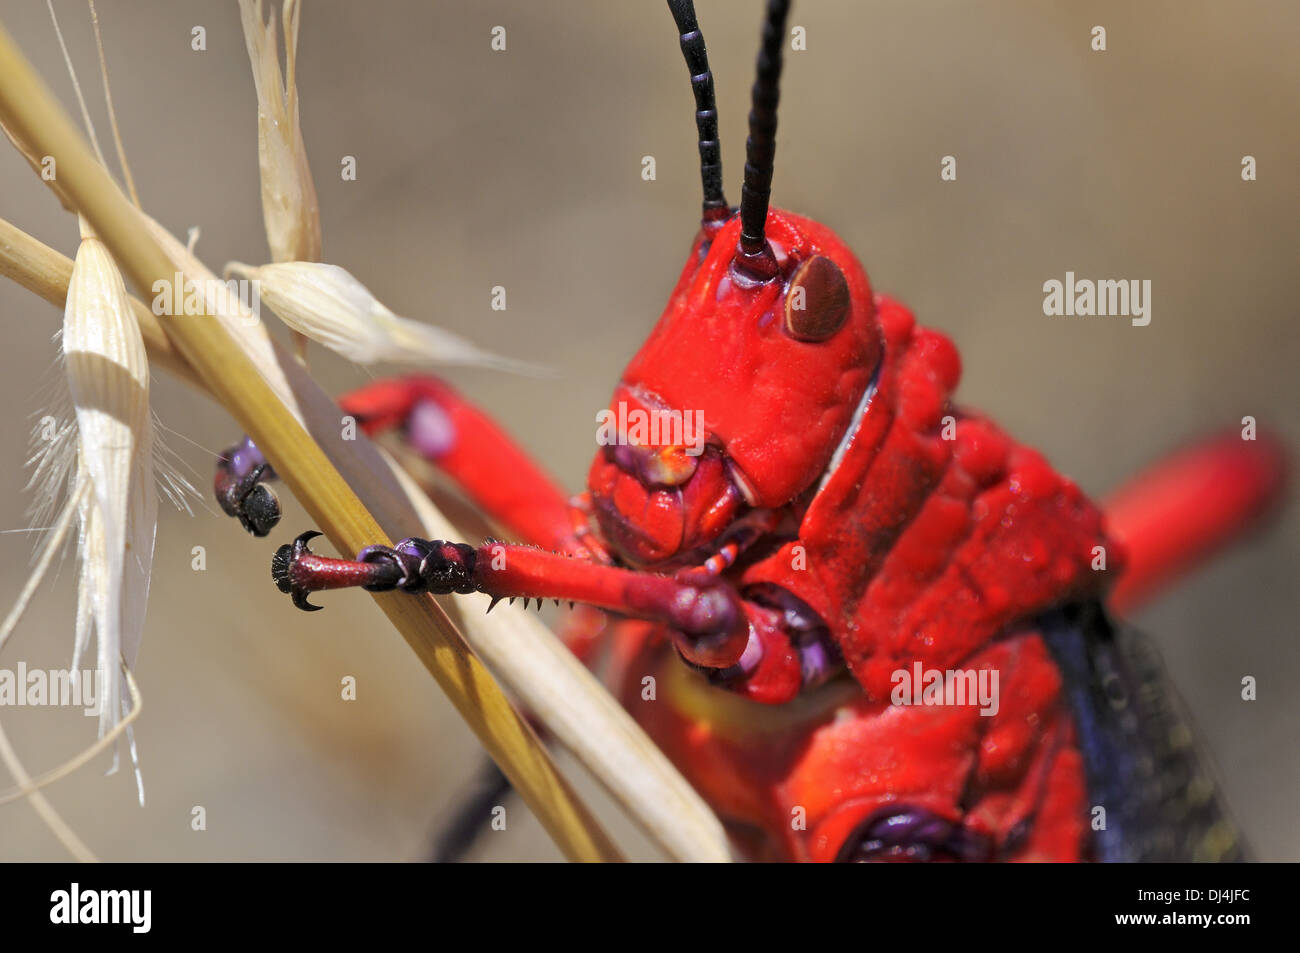 Common milkweed locust, South Africa Stock Photo